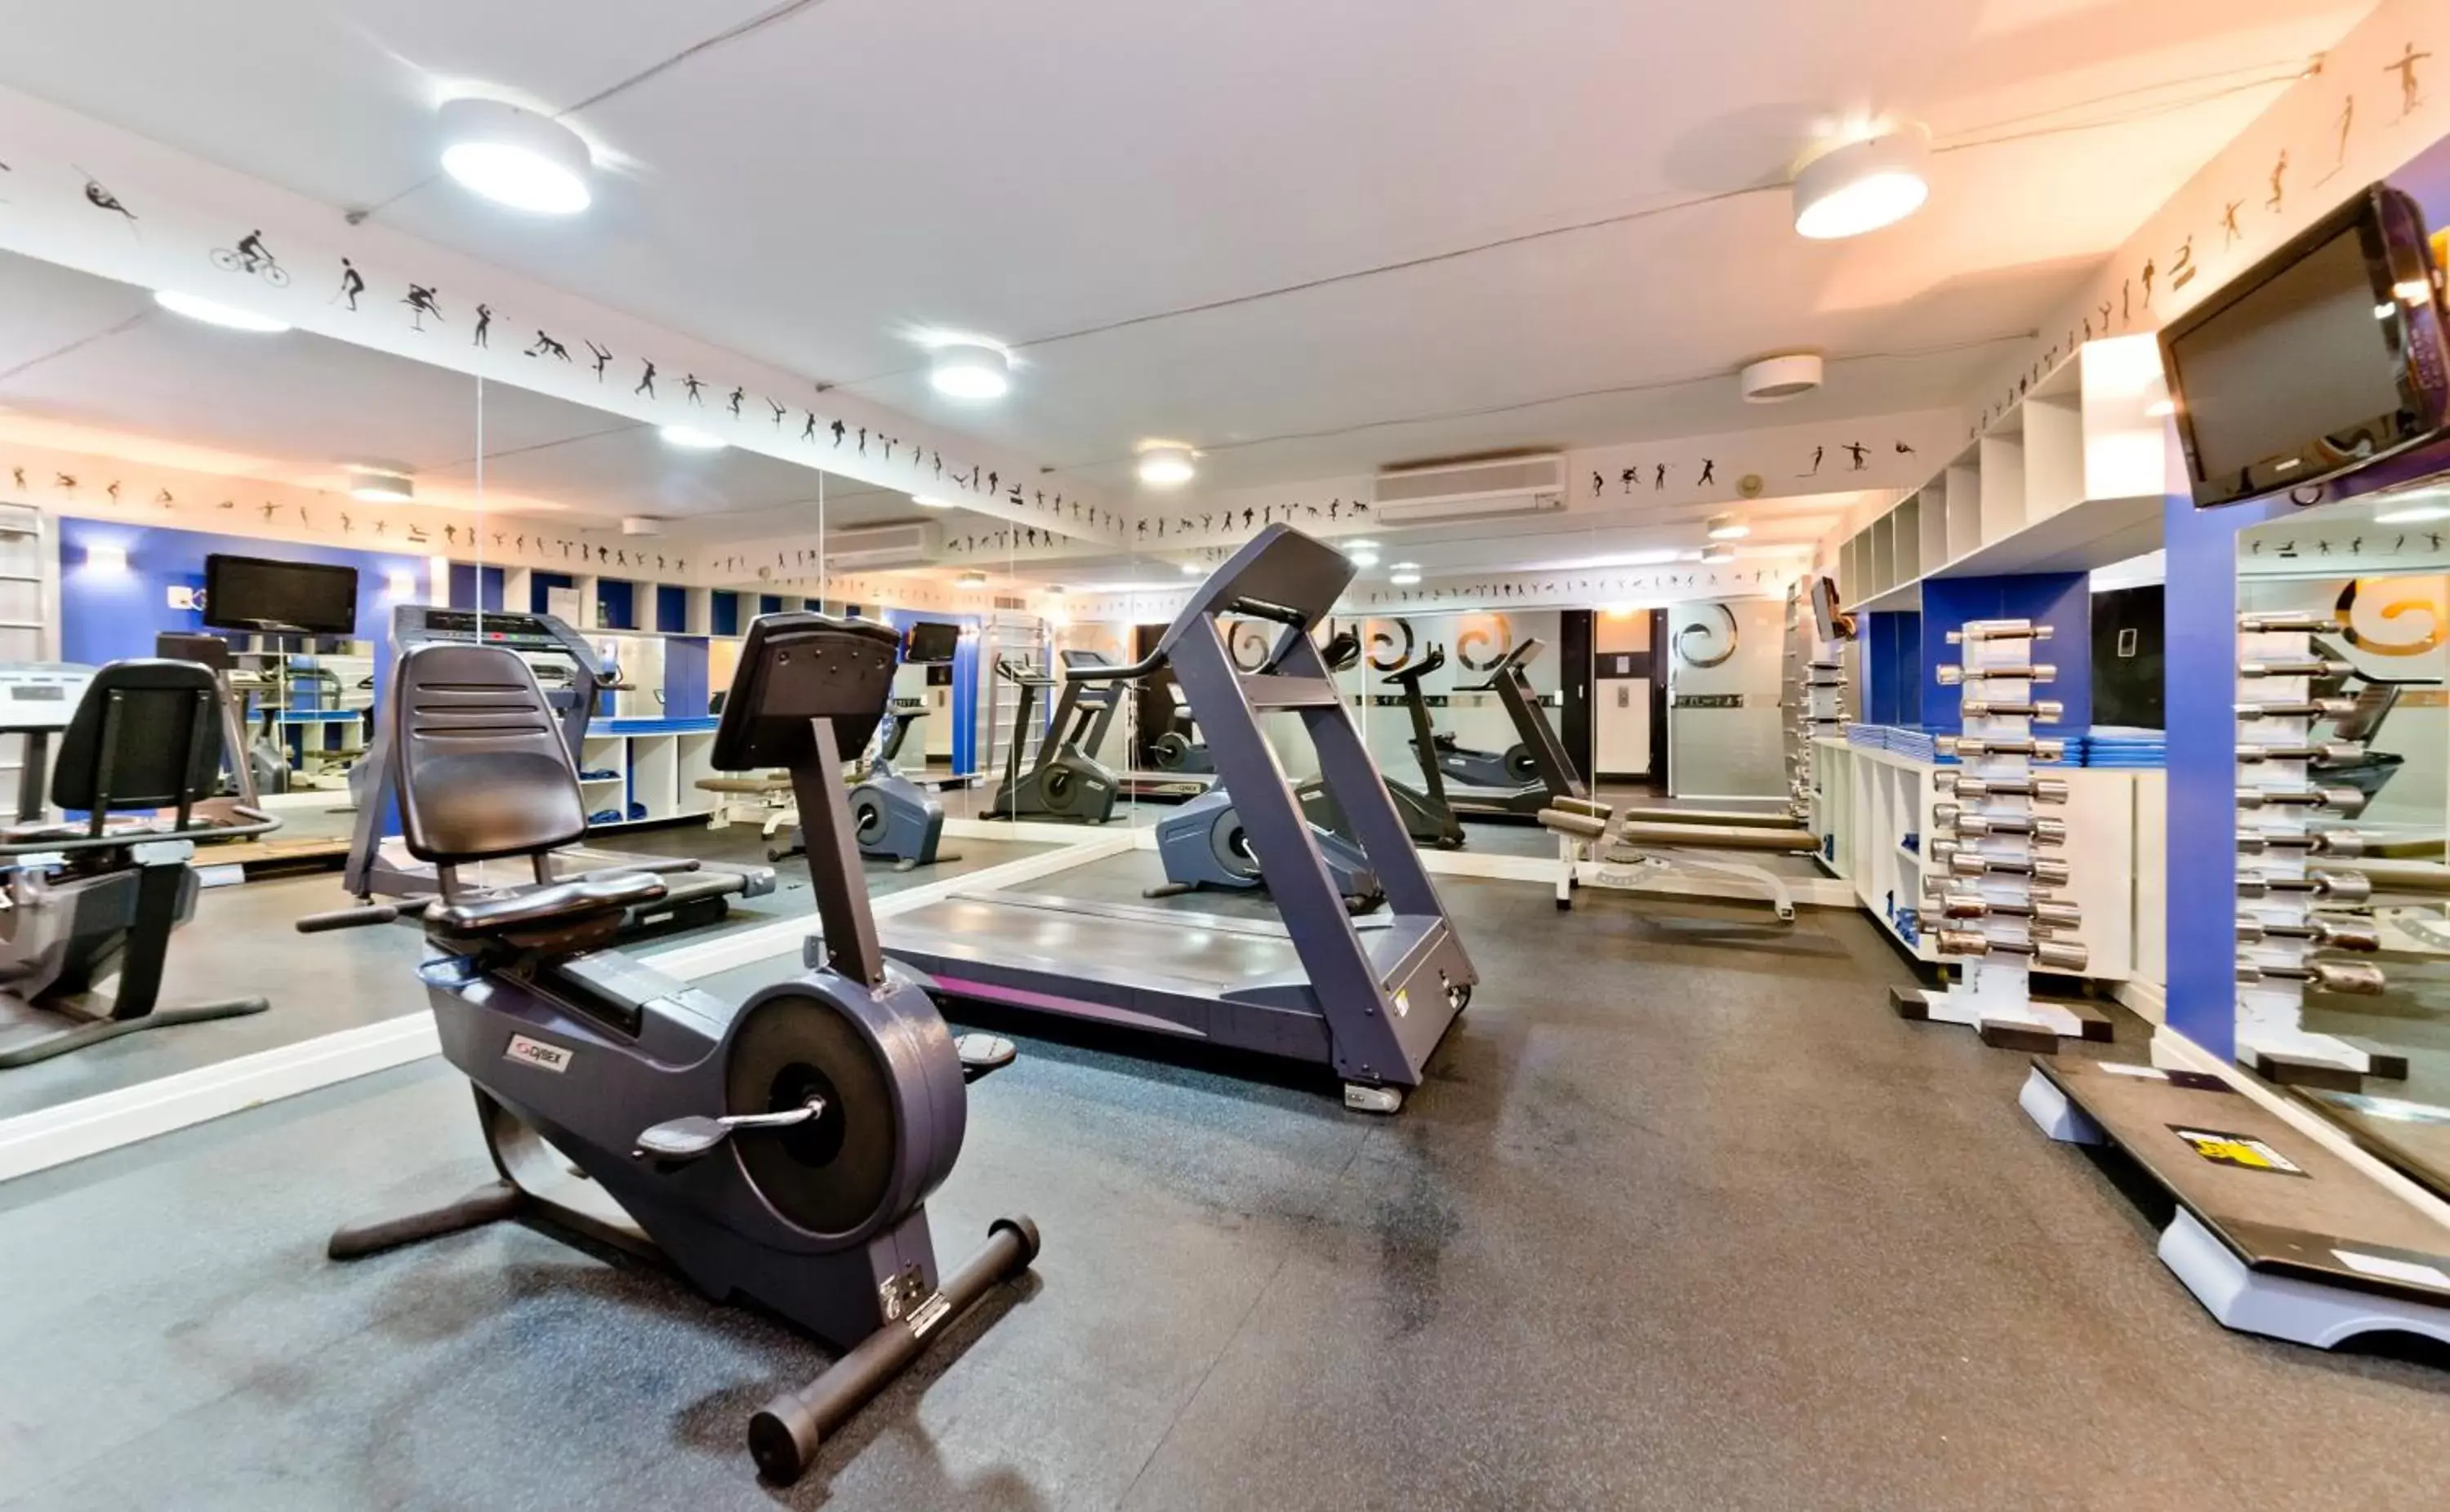 Fitness centre/facilities, Fitness Center/Facilities in Pergamon SP Frei Caneca by Accor